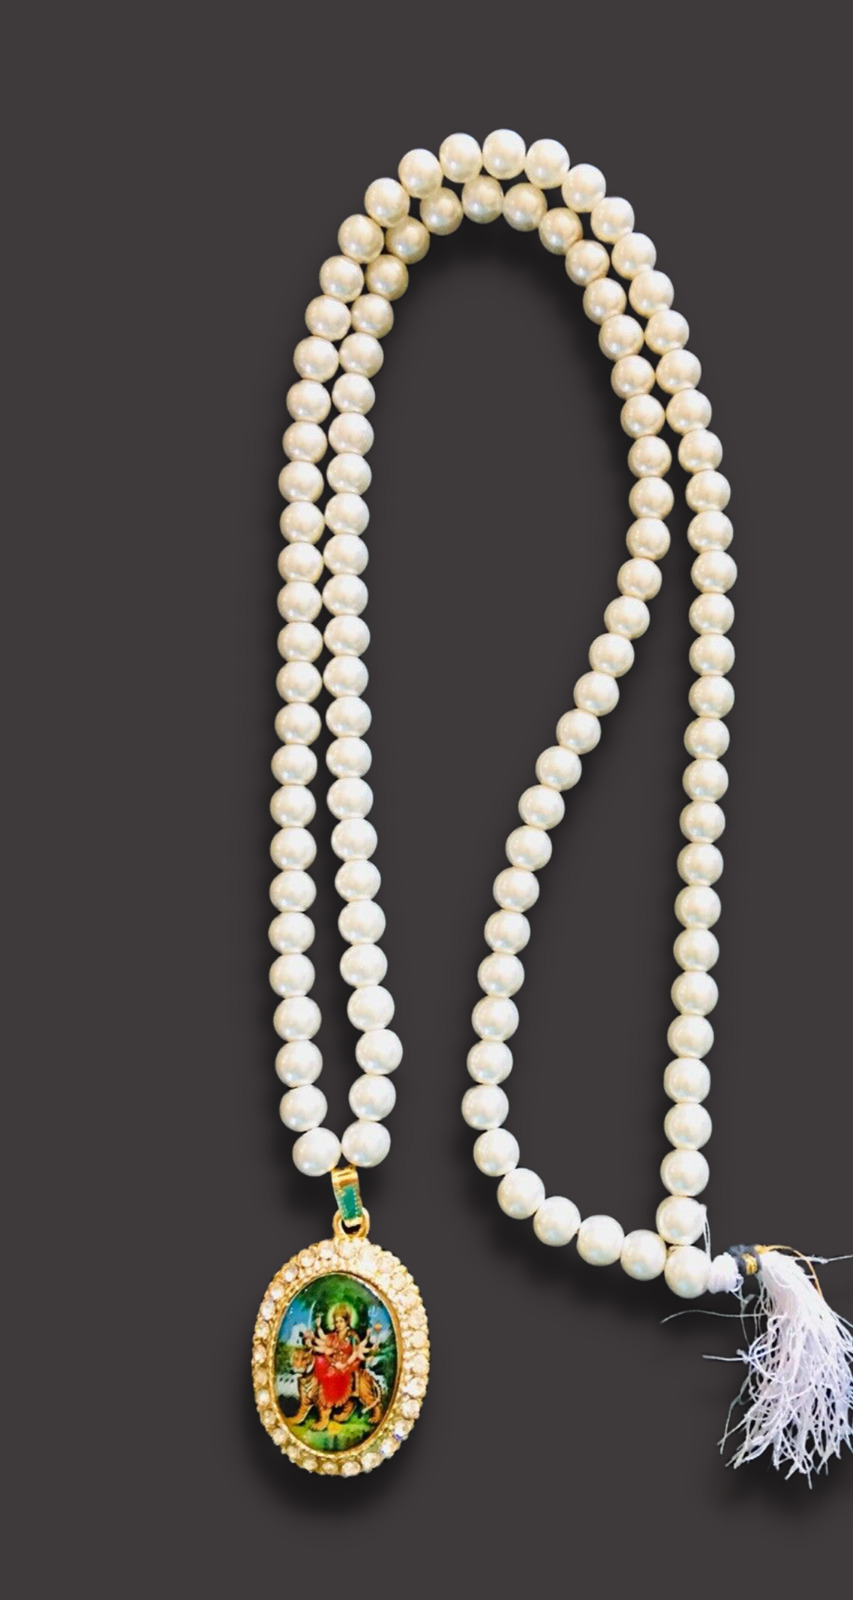 DURGA MAA Pendant Locket With 100 Pearl Stone Necklace Hindu Religious ENERGIZED